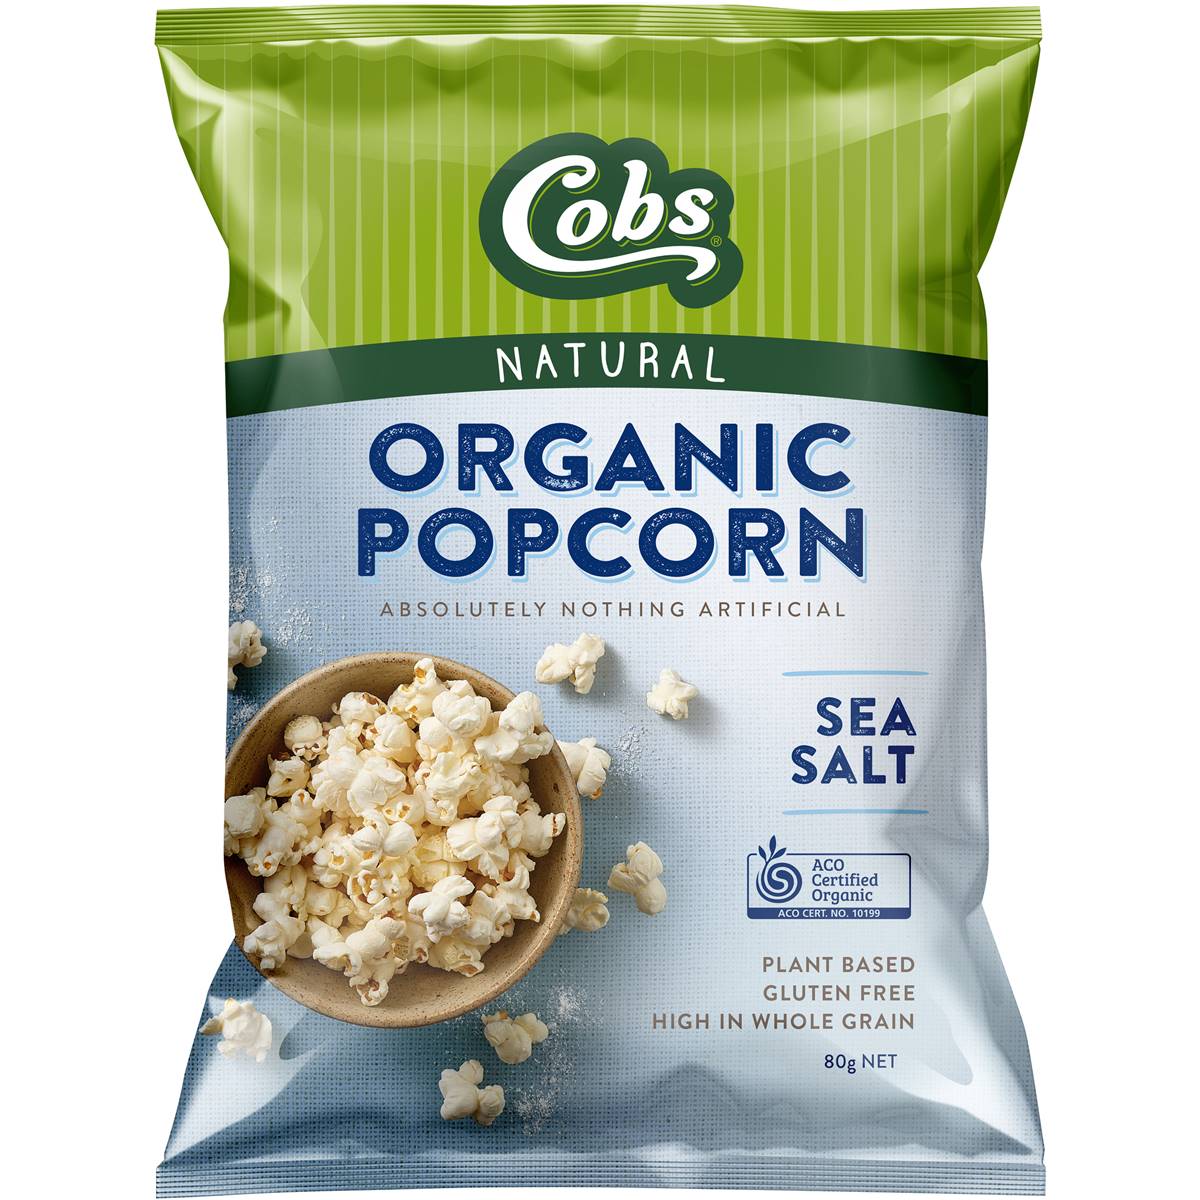 Calories in Cobs Organic Popcorn Sea Salt